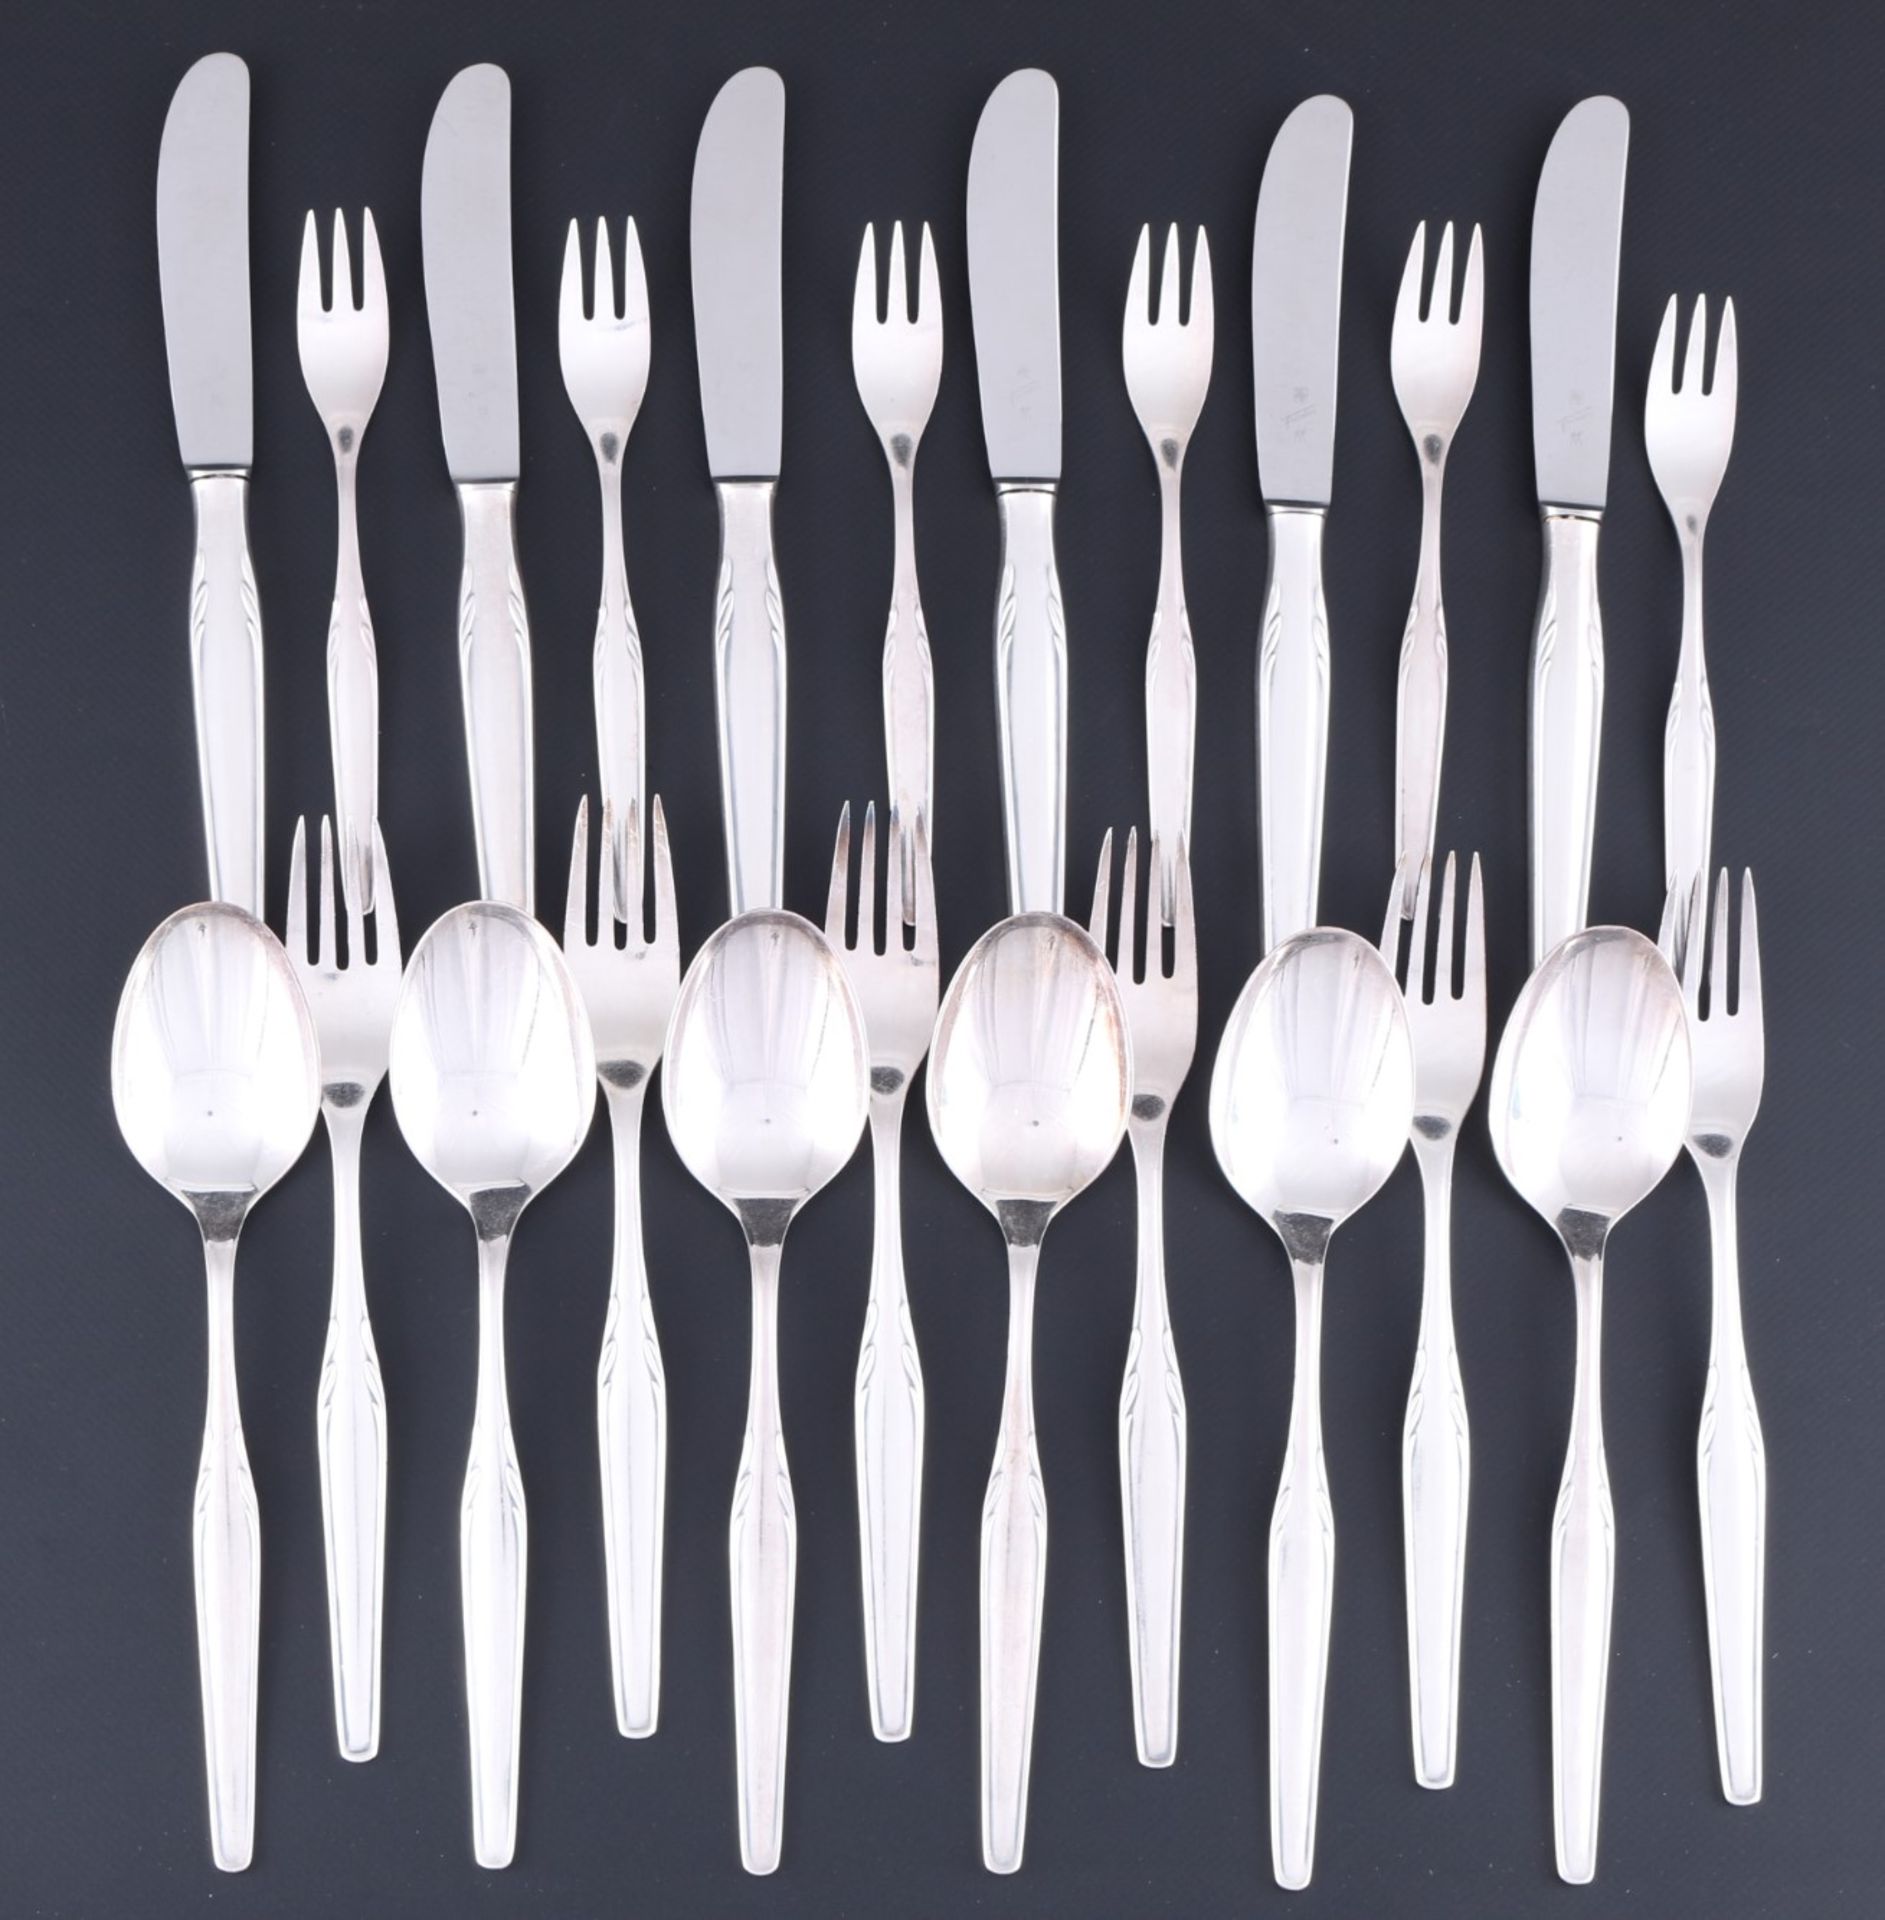 WMF Paris 800 silver cutlery for 6 persons, Silberbesteck für 6 Personen, - Image 2 of 4